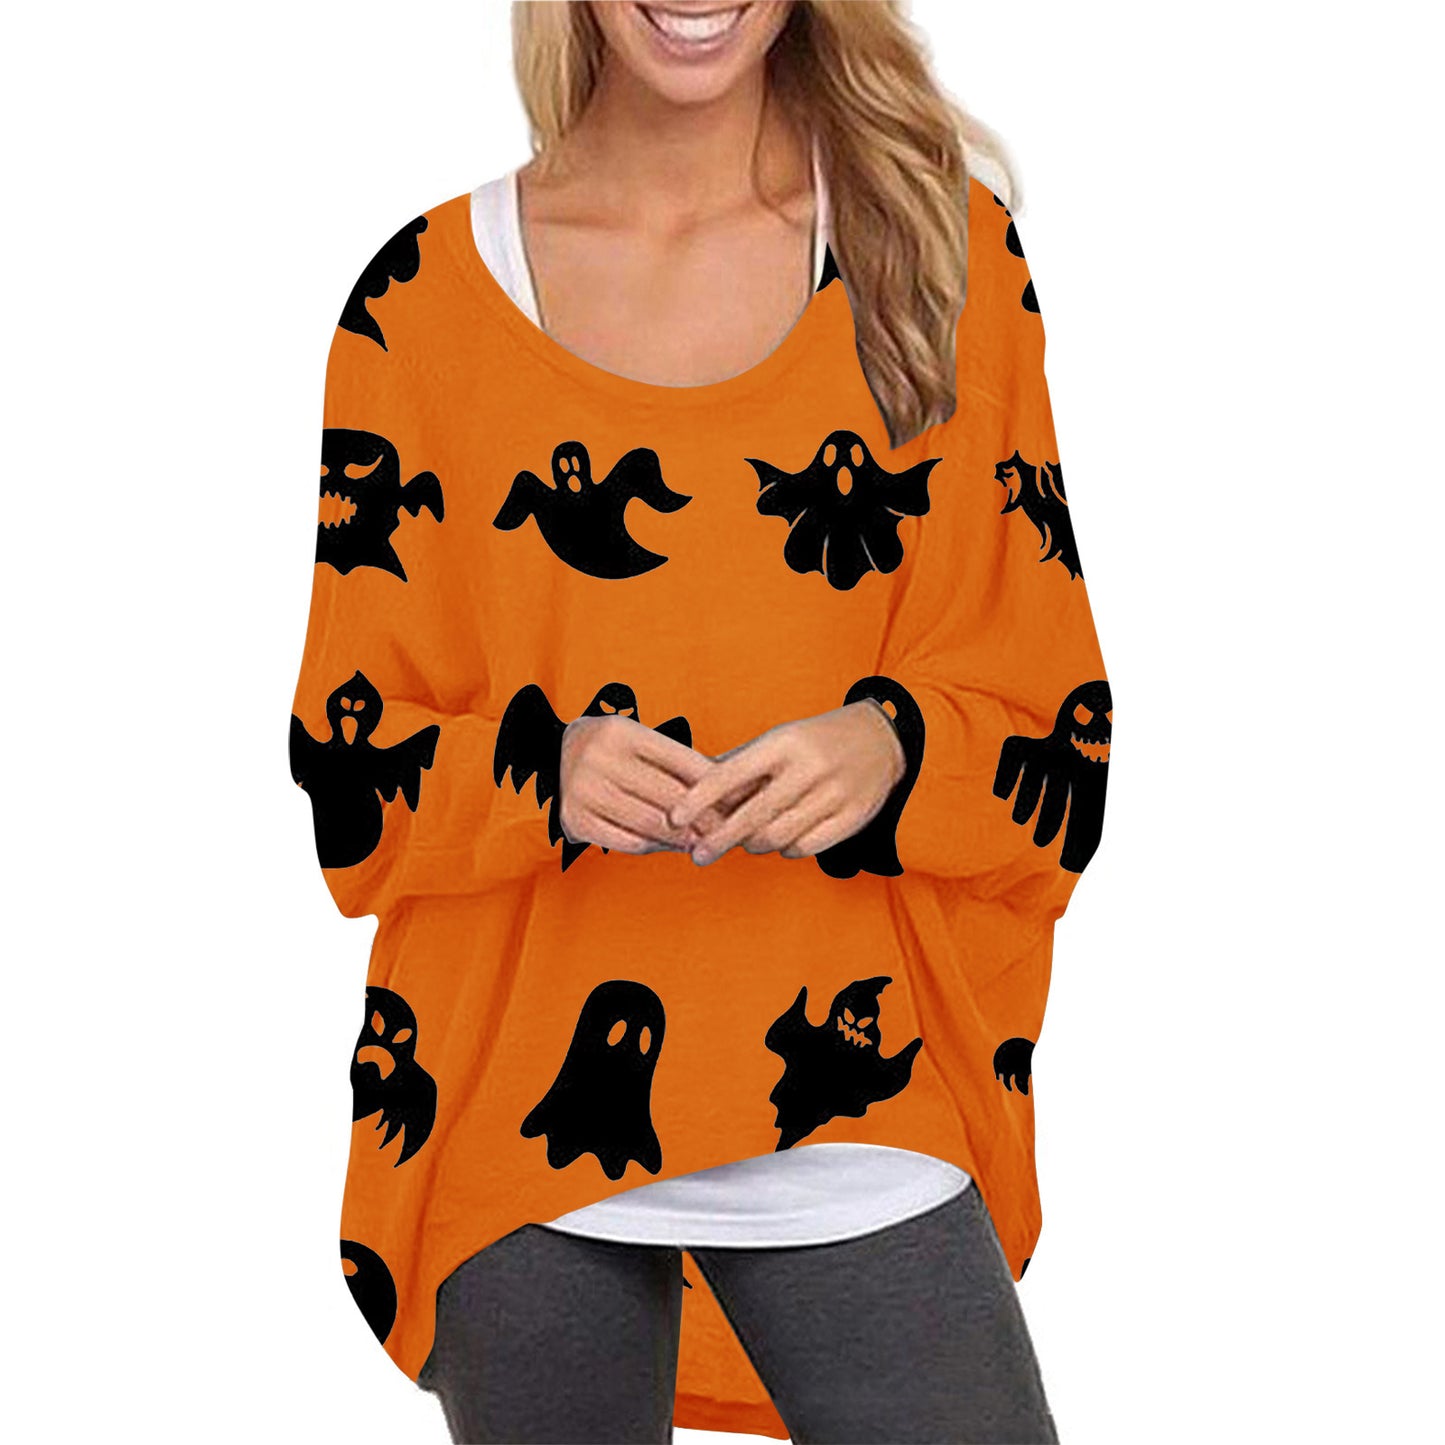 Women Halloween Pumpkin Print Long Sleeves Tops-For Halloween-Spirit-S-Free Shipping at meselling99